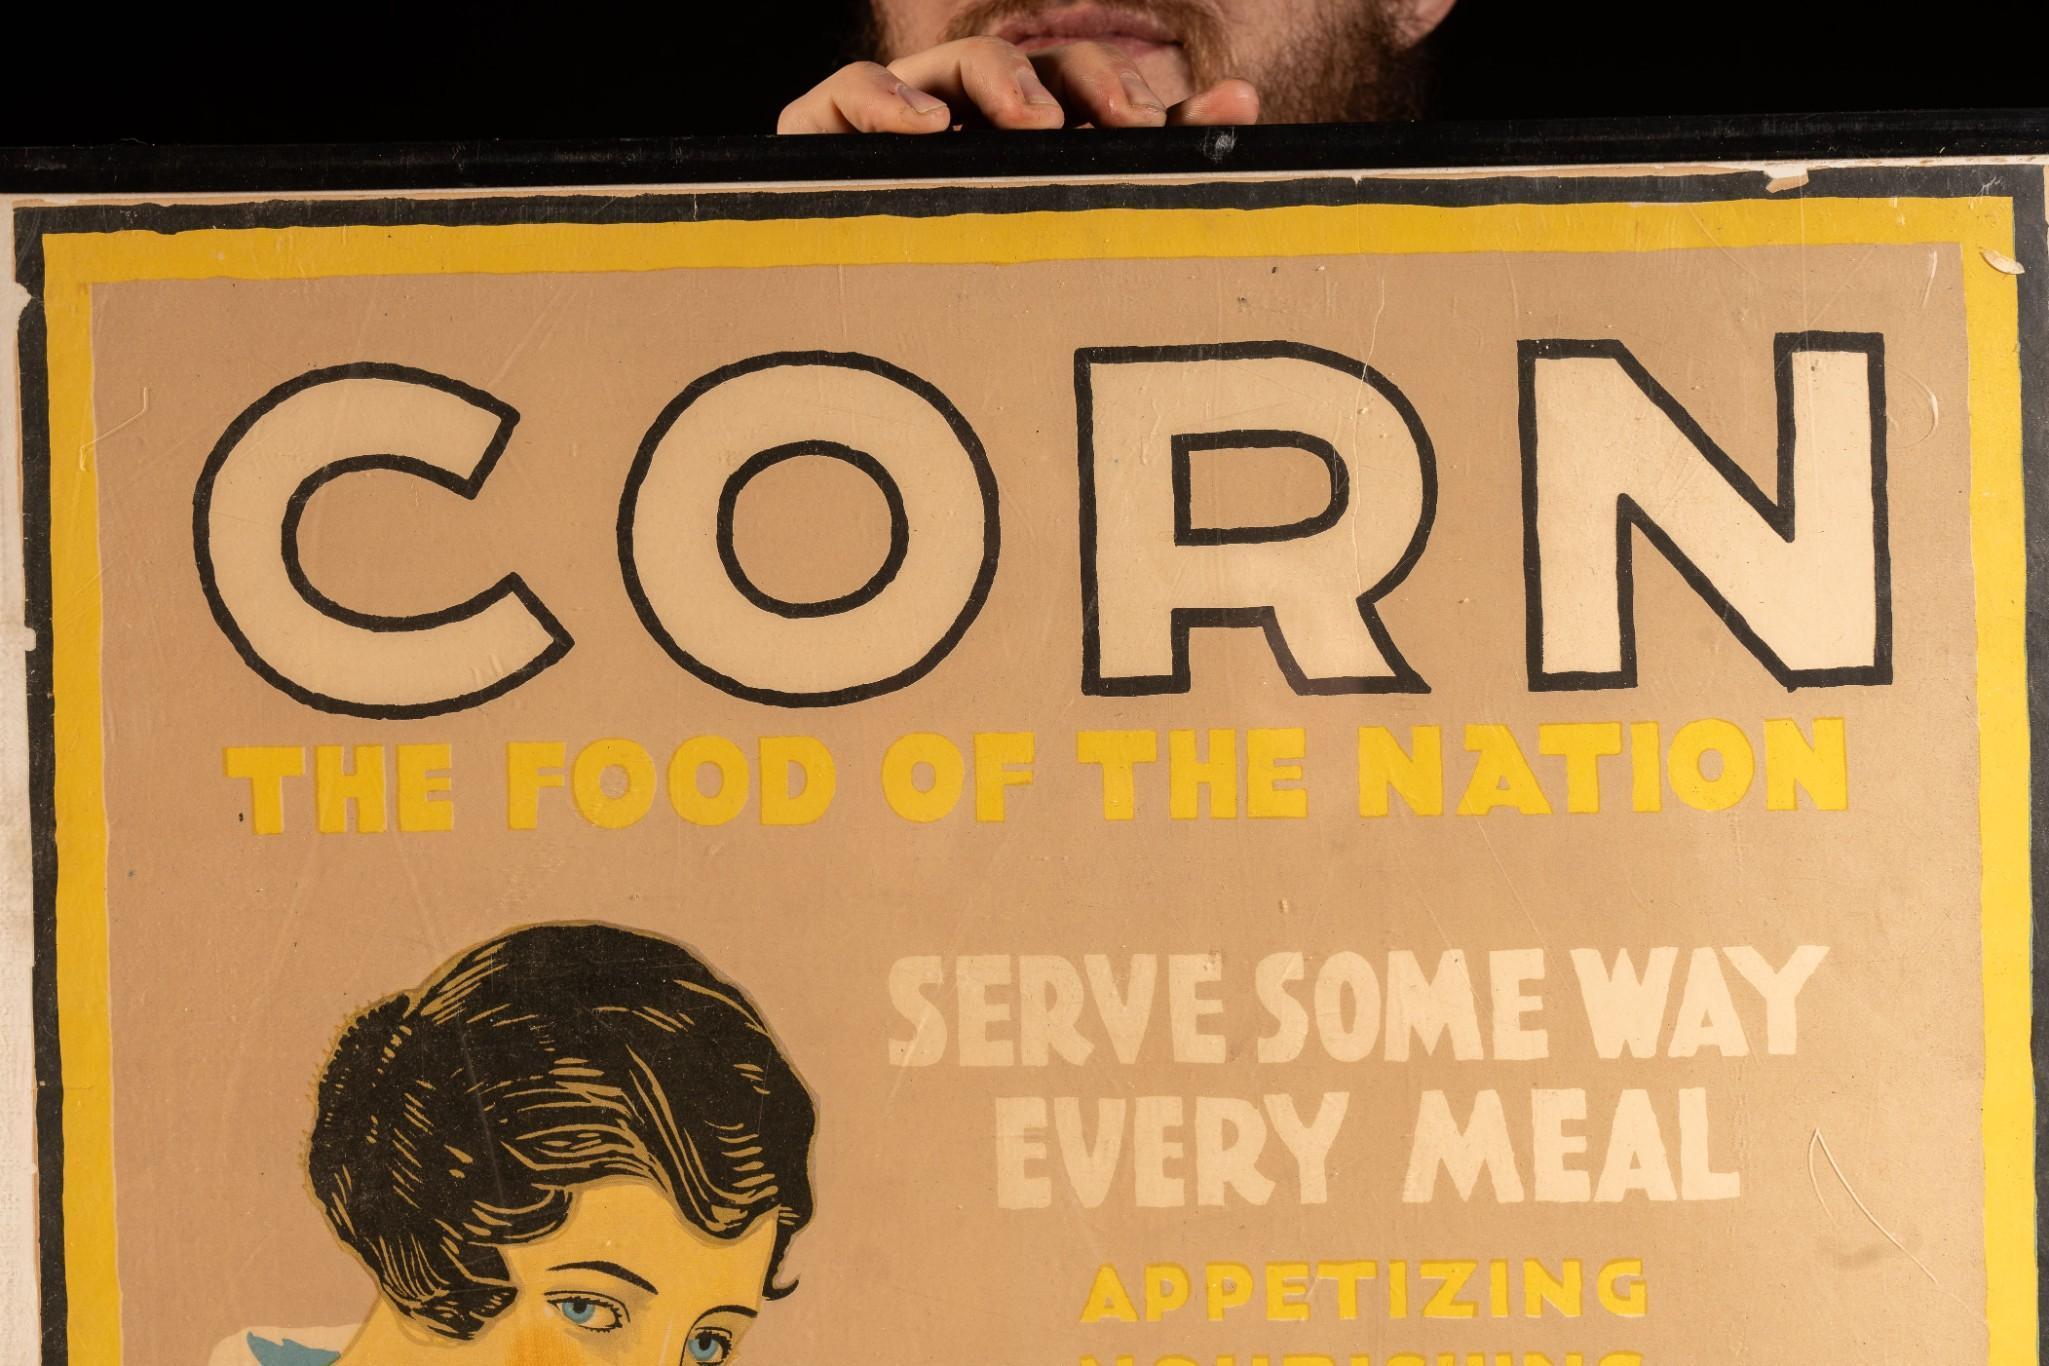 Antique WW1 Corn Poster